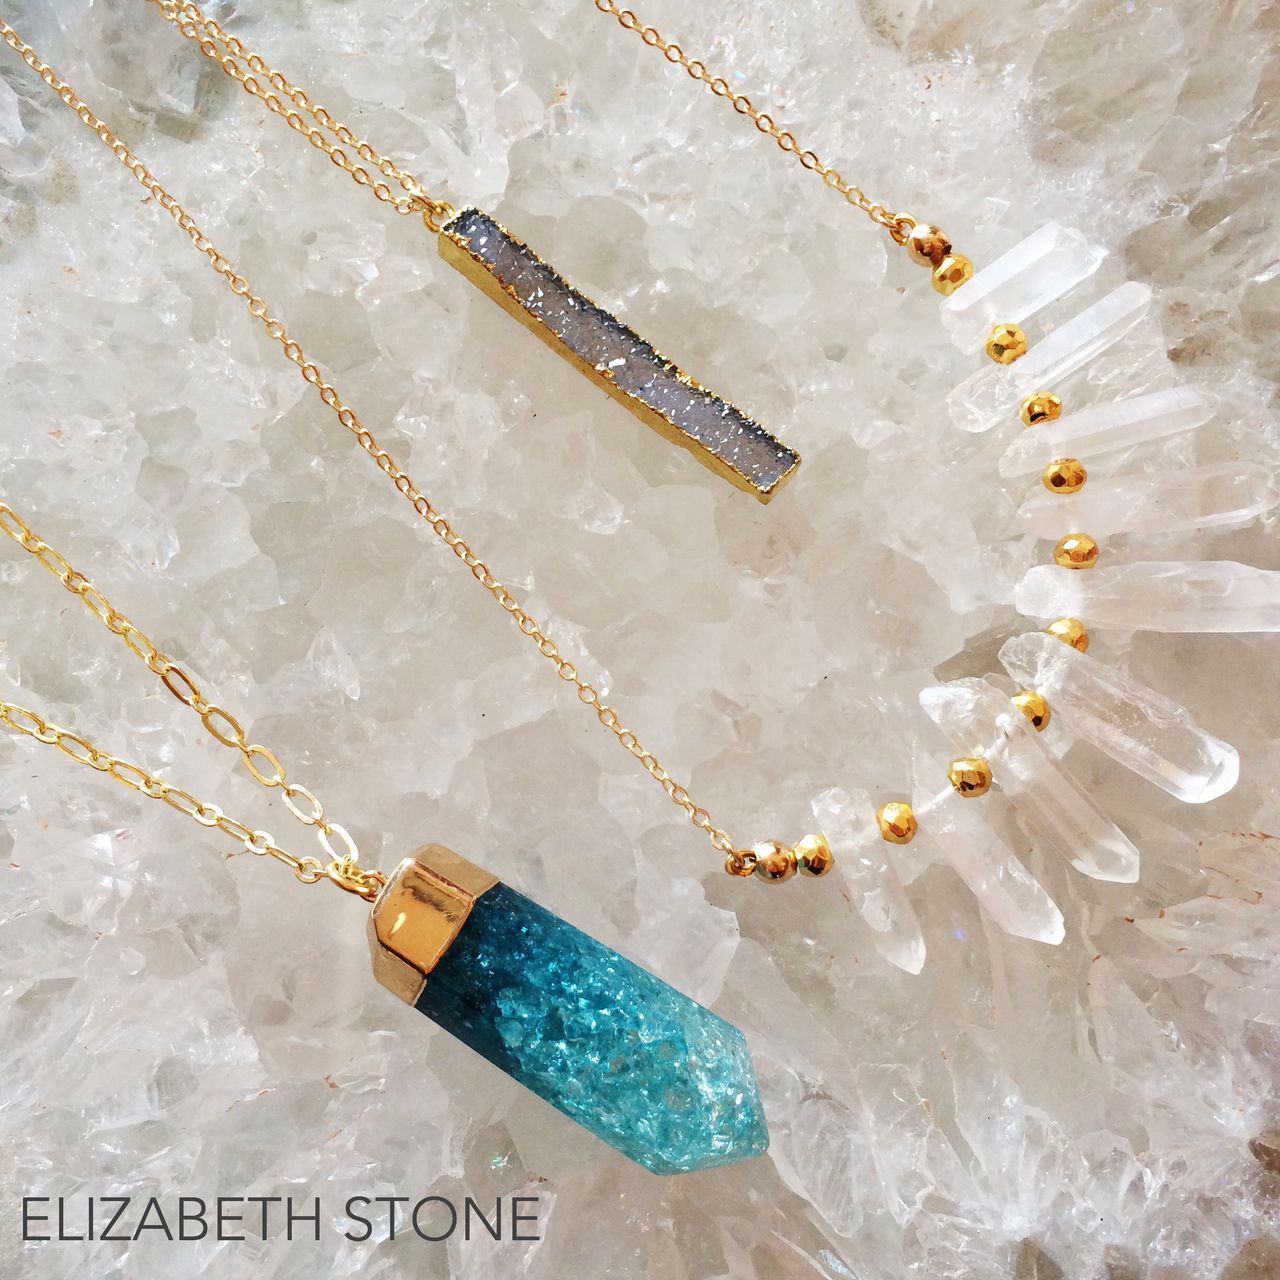 Elizabeth Stone Jewelry  Aqua Crackle Quartz Point Necklace Gold